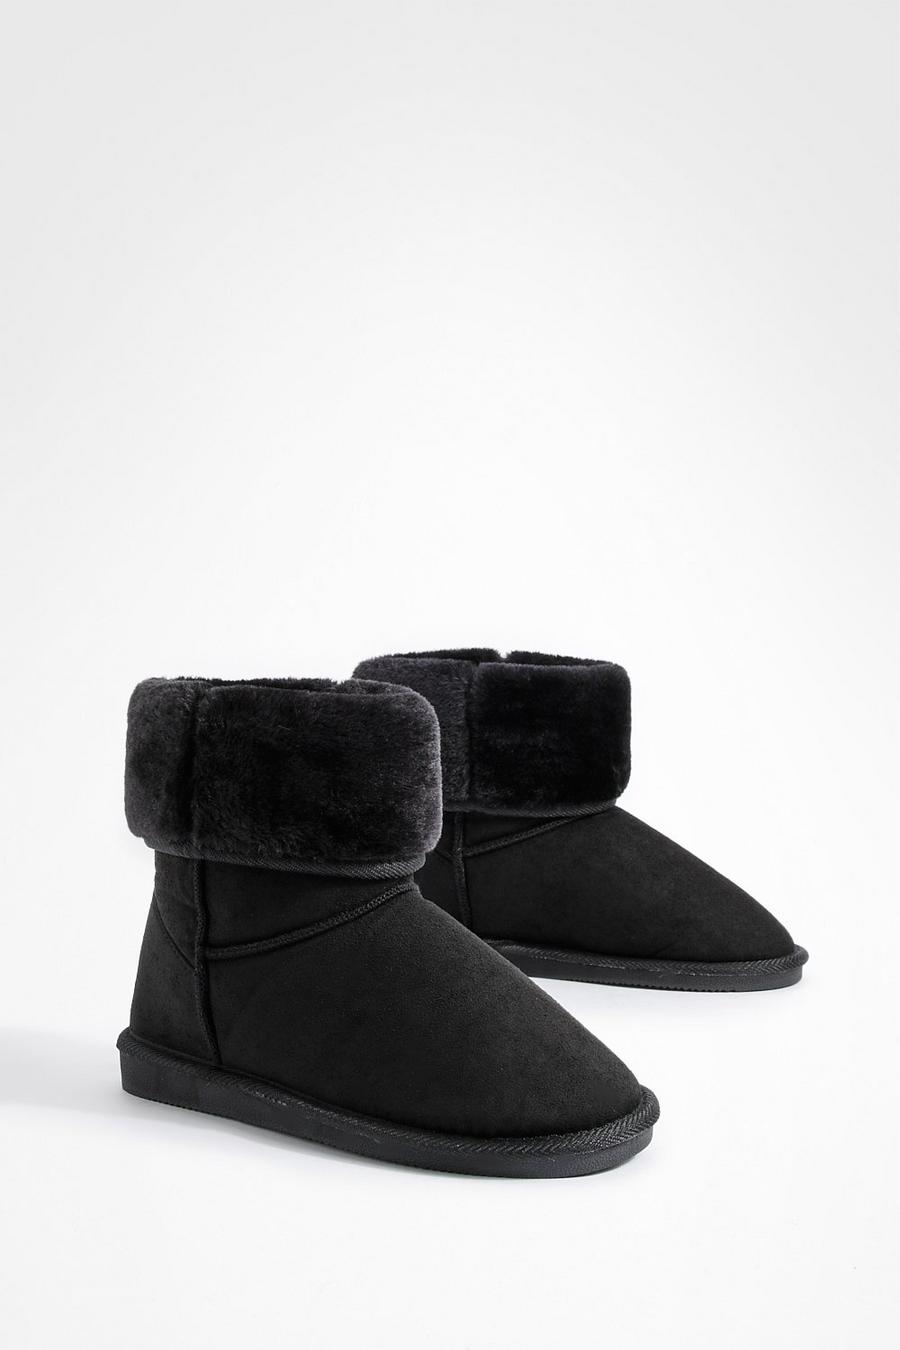 Black Fur Foldover Cozy Boots